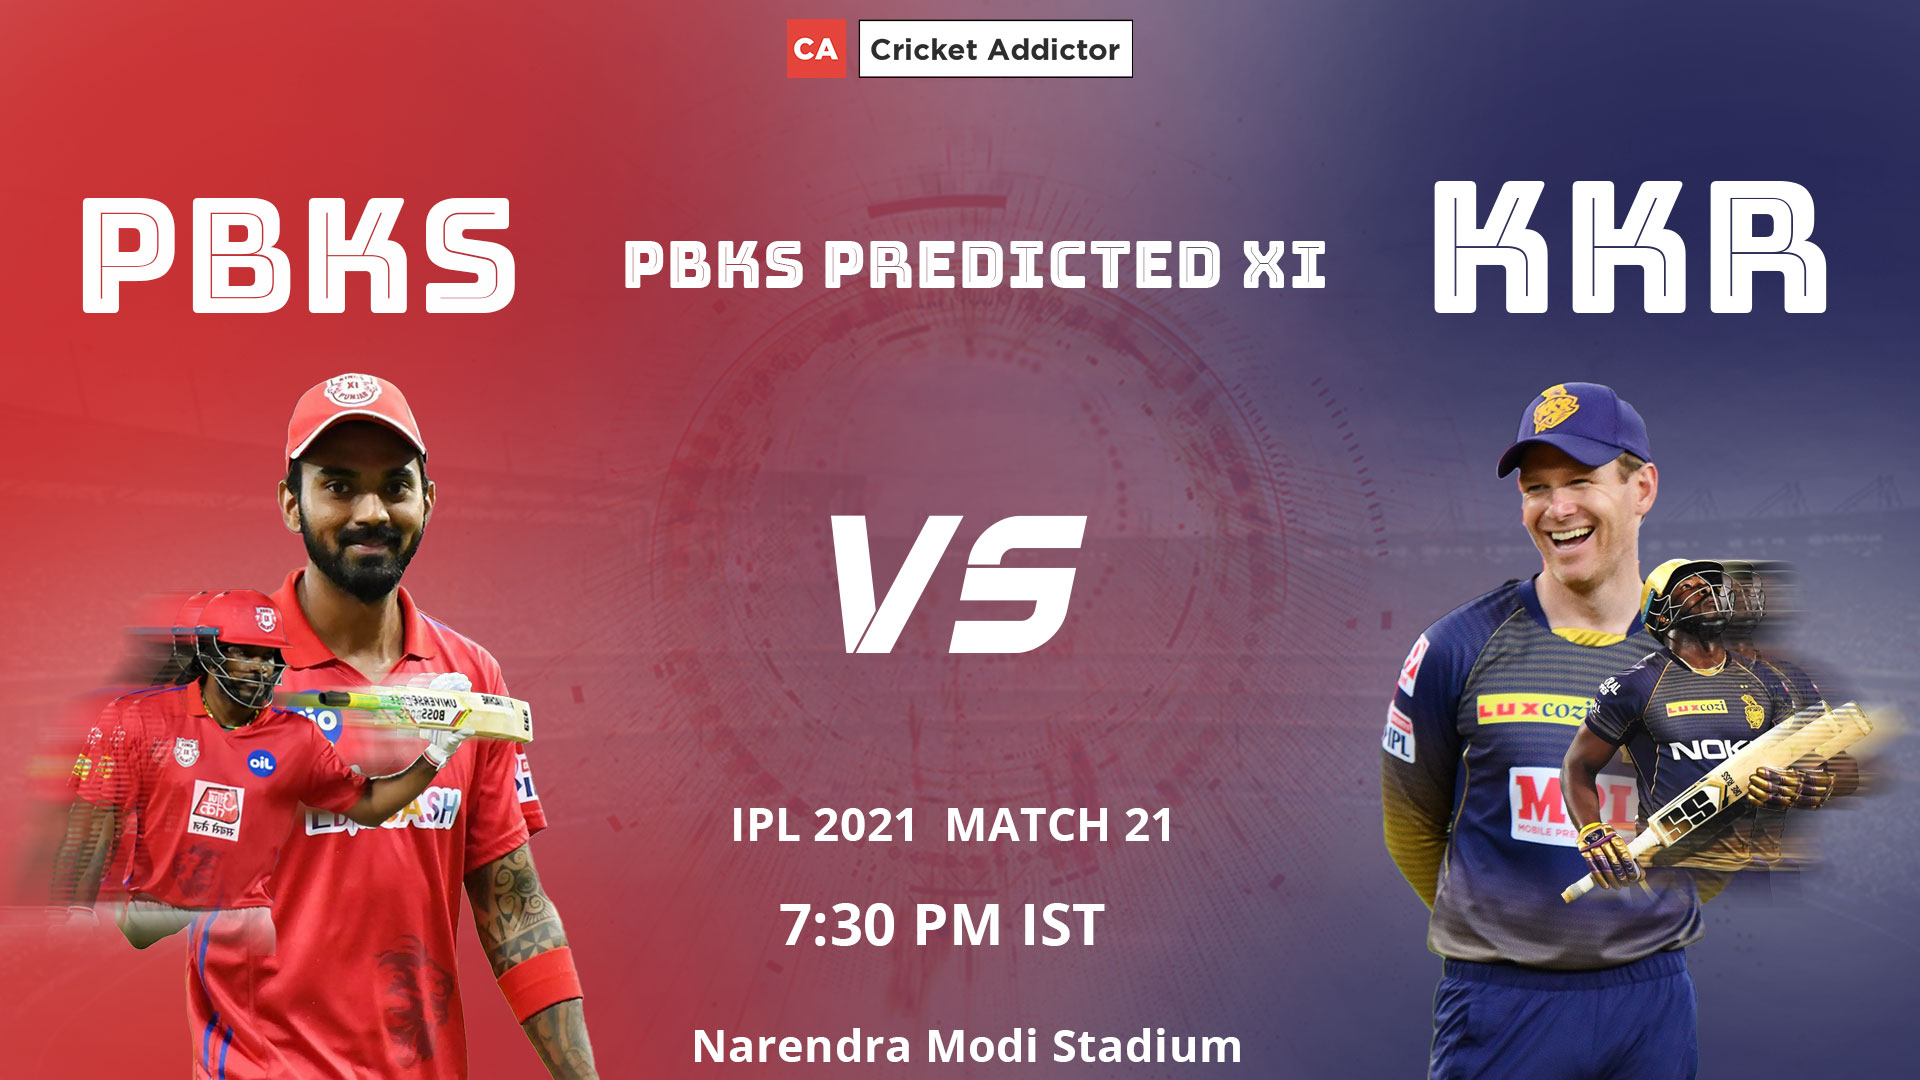 IPL 2021, Punjab Kings, PBKS, PBKS vs KKR, predicted playing XI, playing XI